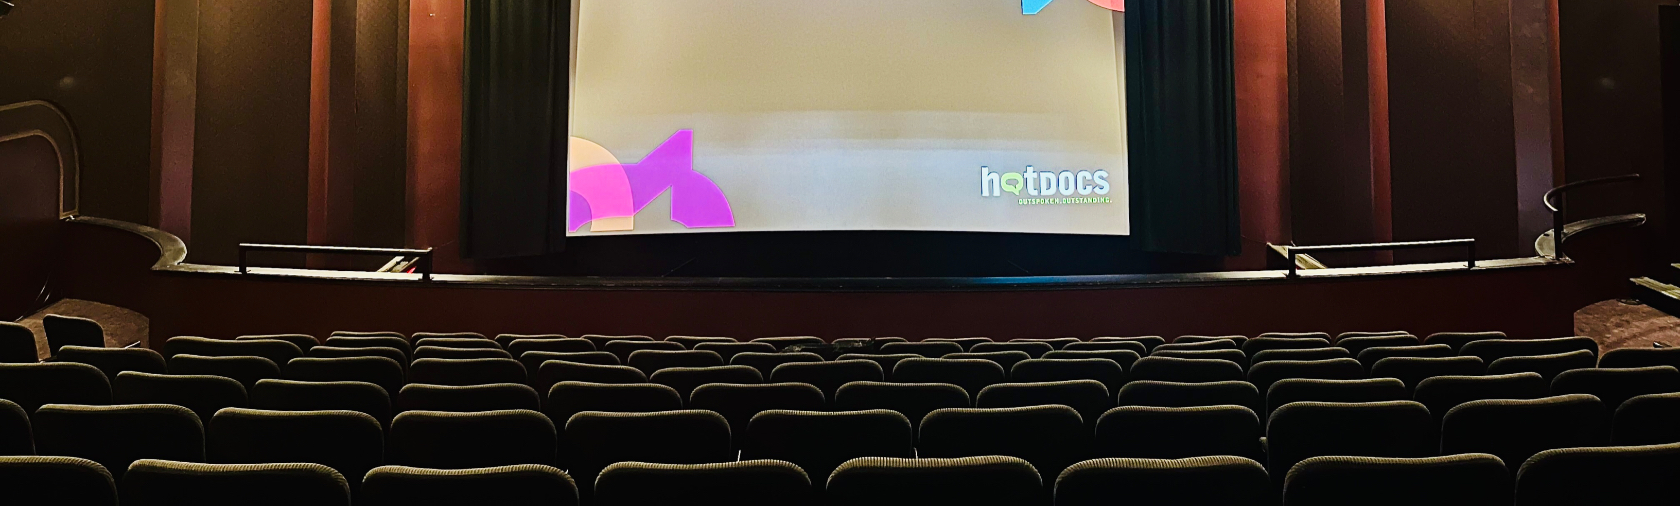 Hot Docs Cinema screen